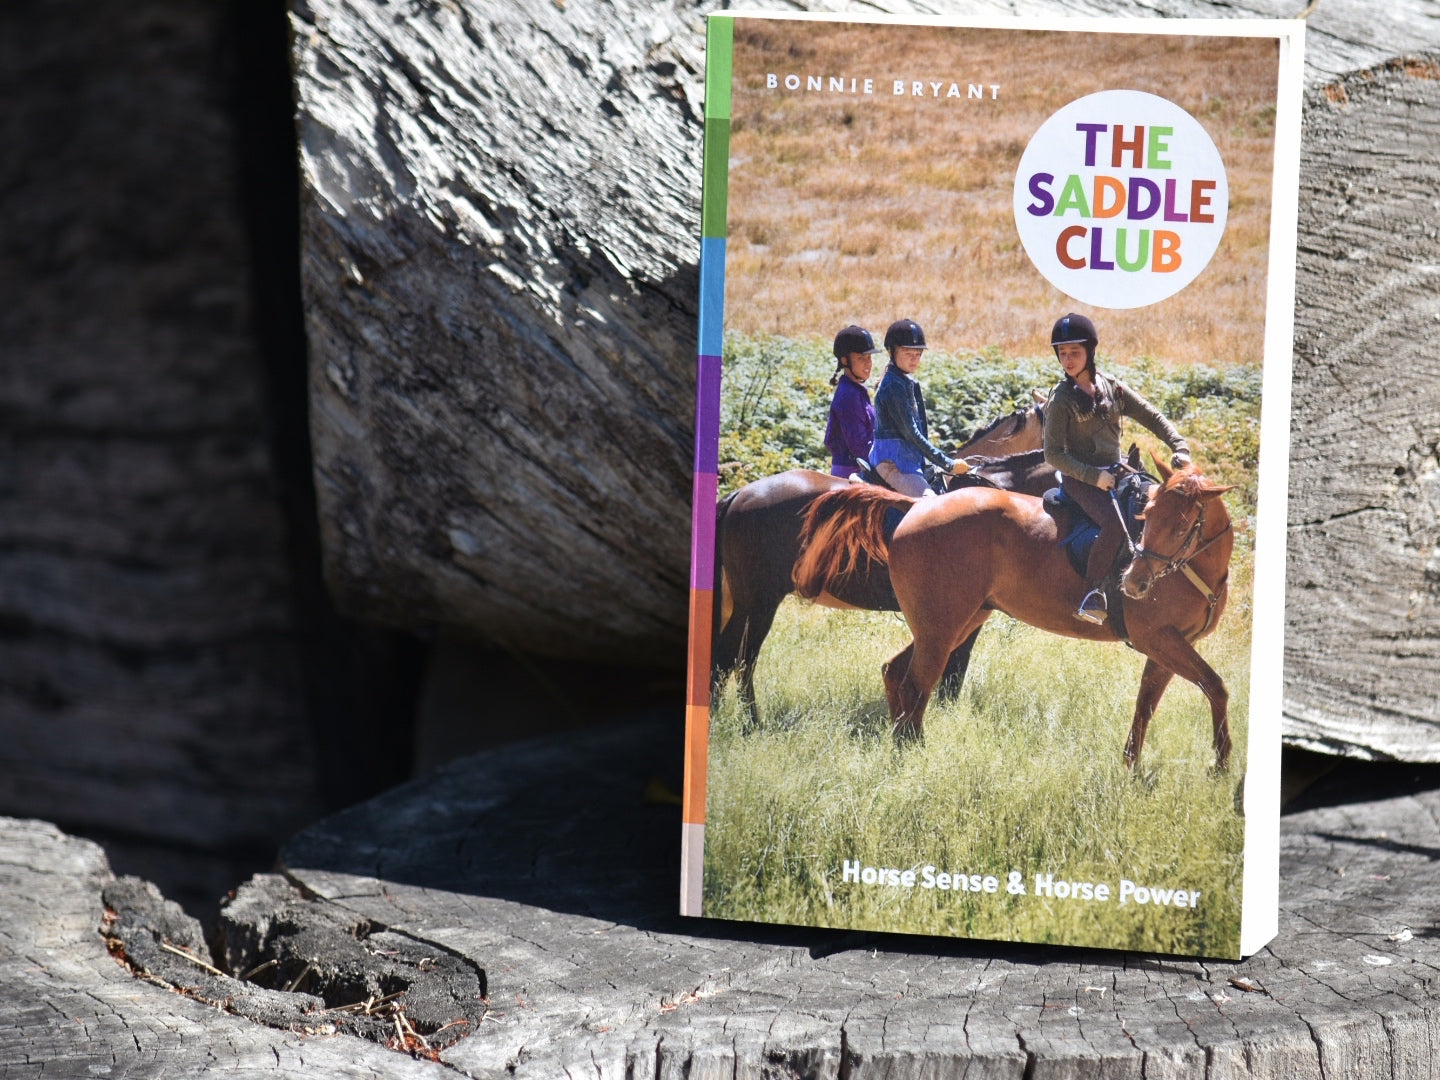 The Saddle Club: Horse Sense & Horse Power by Bonnie Bryant